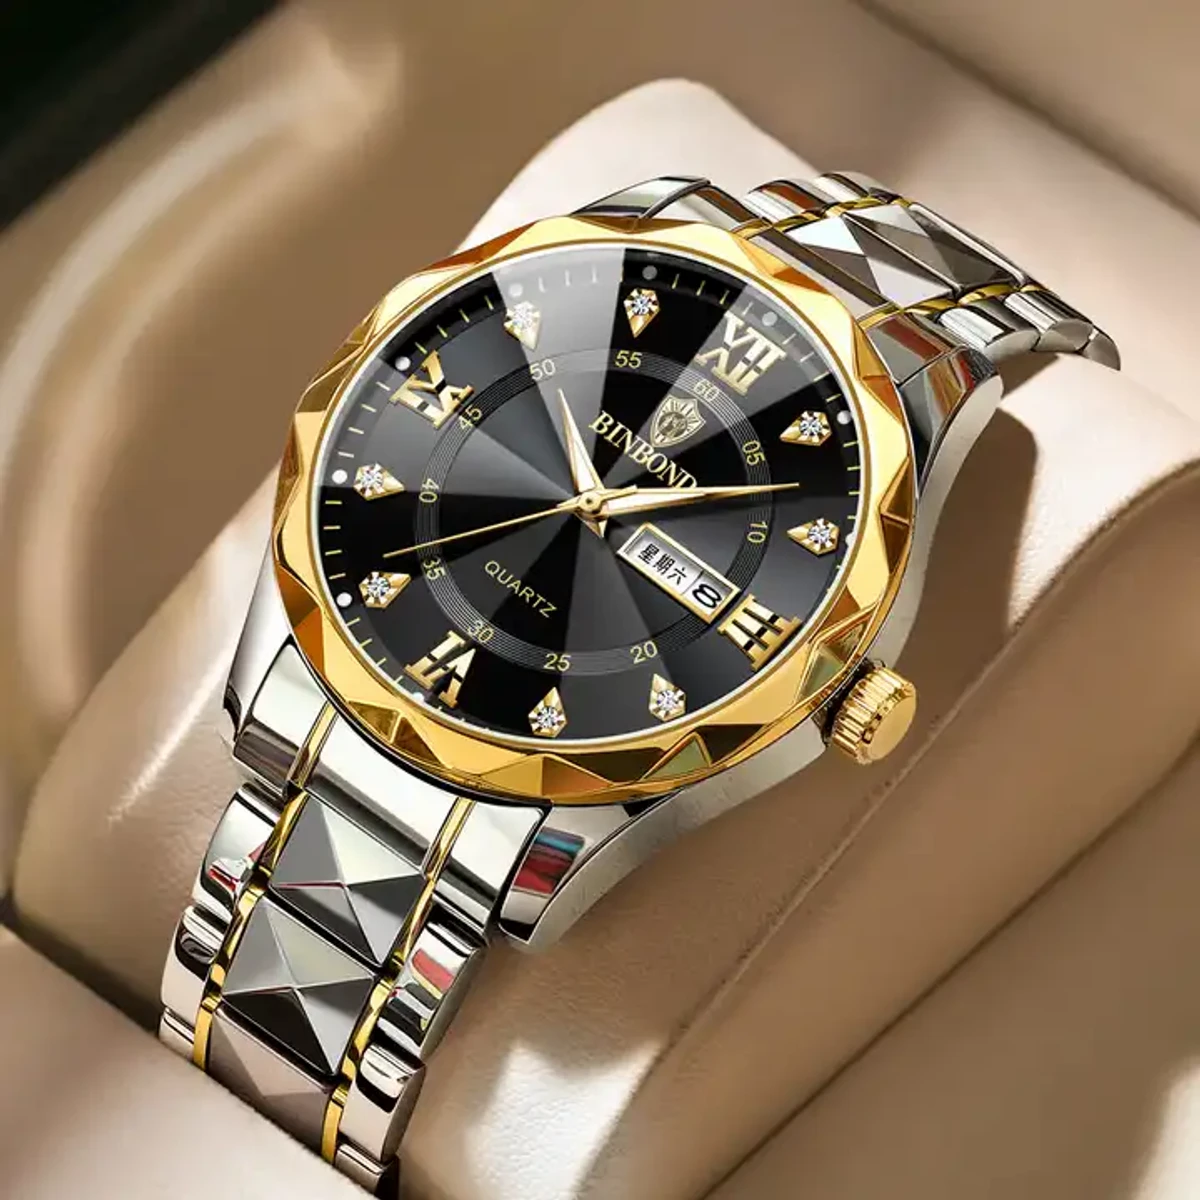 Luxury Binbond authentic men's watch waterproof night light dual calendar watch men's quartz watch diamond ceiling glass- Golden & black